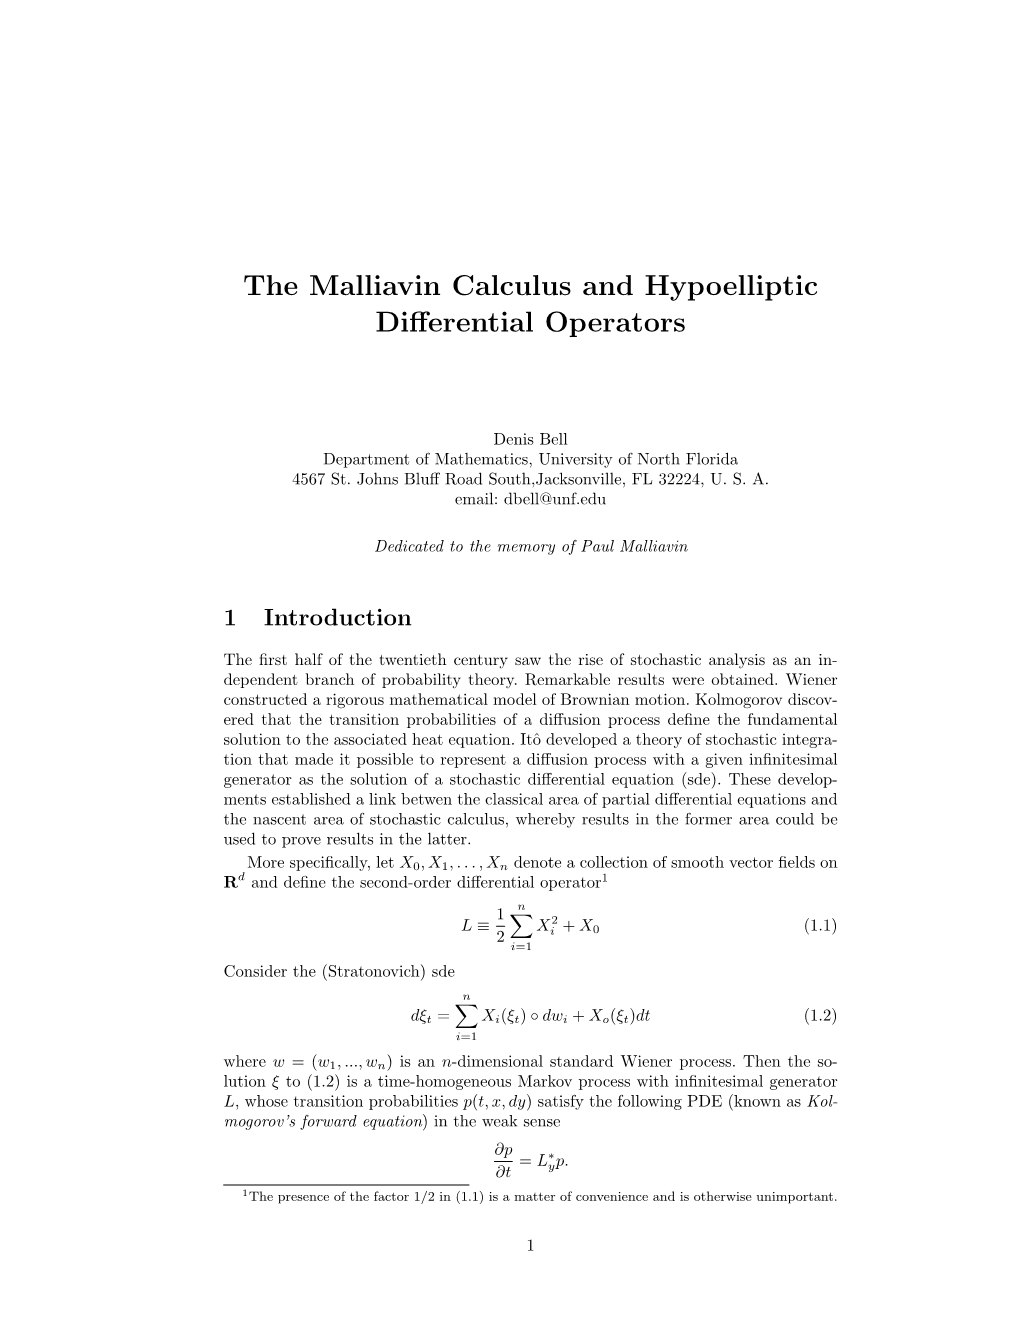 The Malliavin Calculus and Hypoelliptic Differential Operators